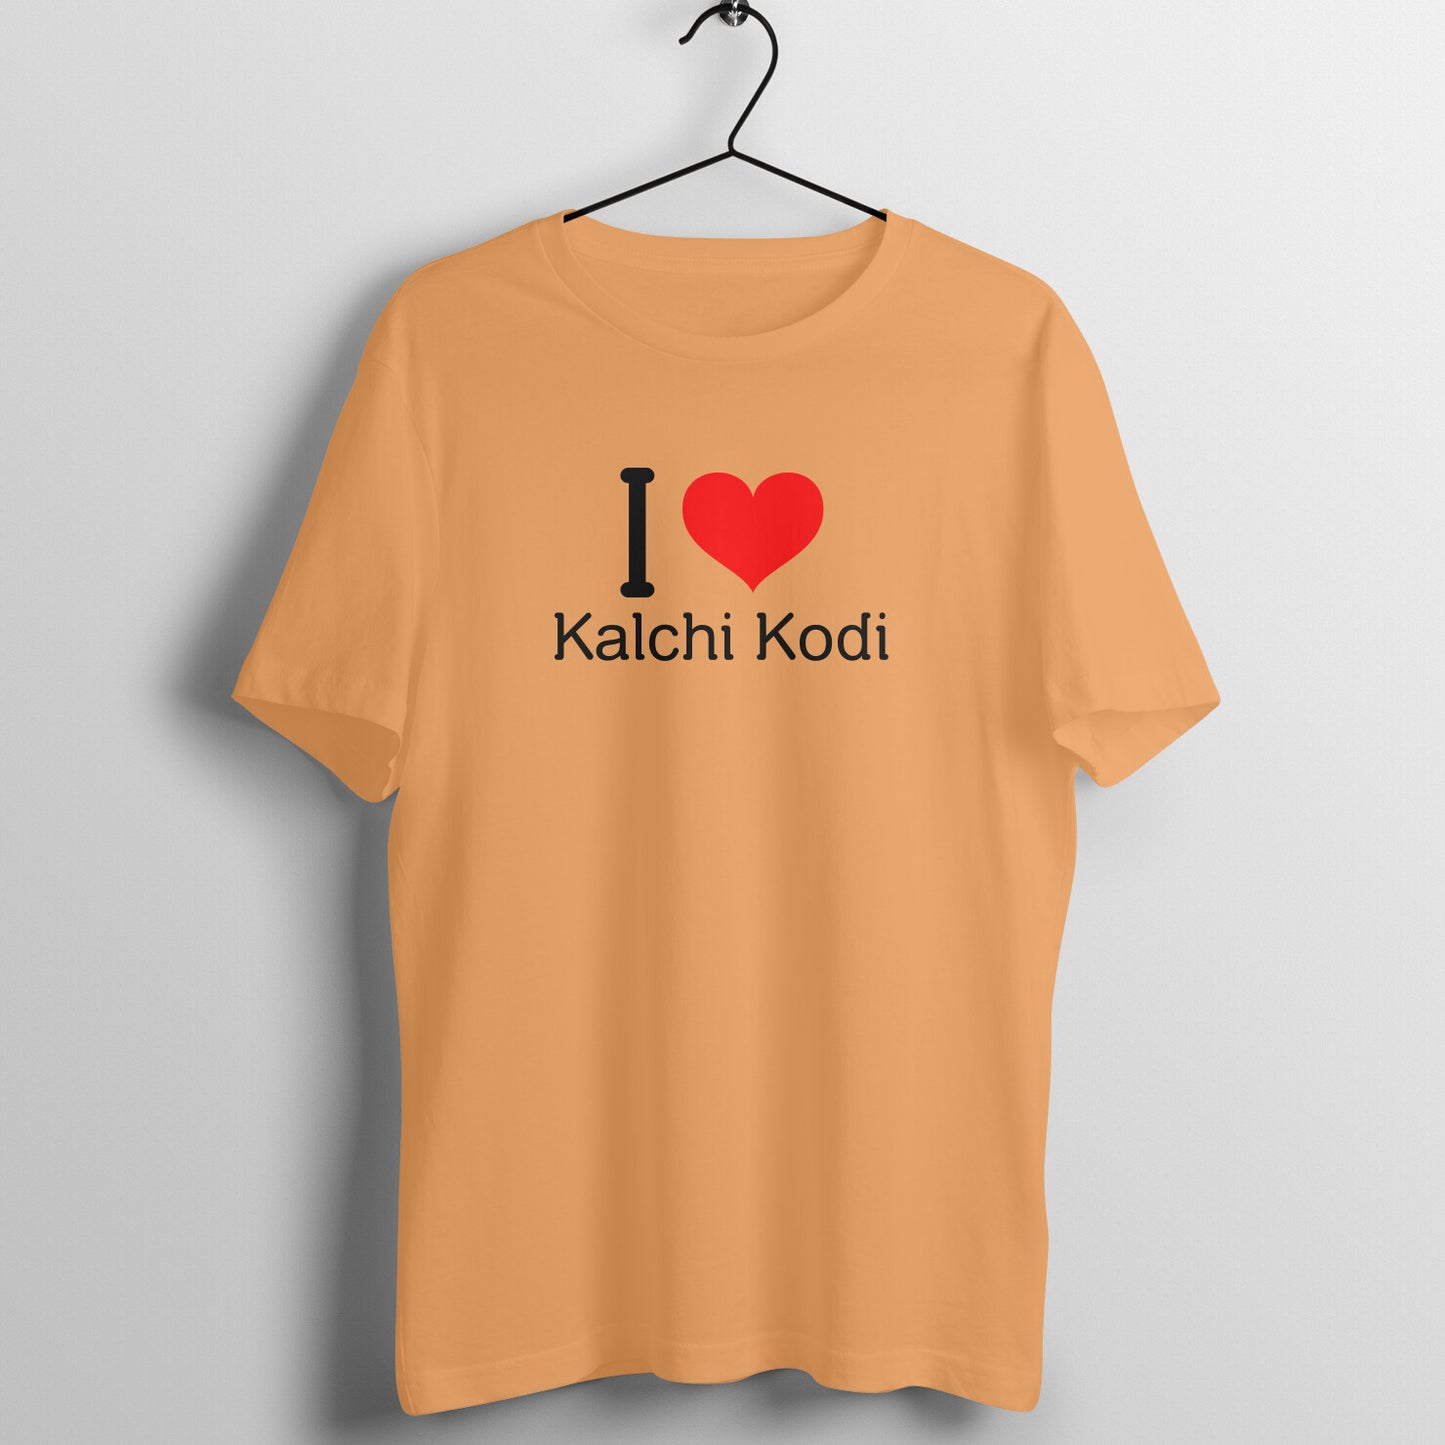 I LOVE KALCHI KODI MEN'S FOOD COLLECTION GENT